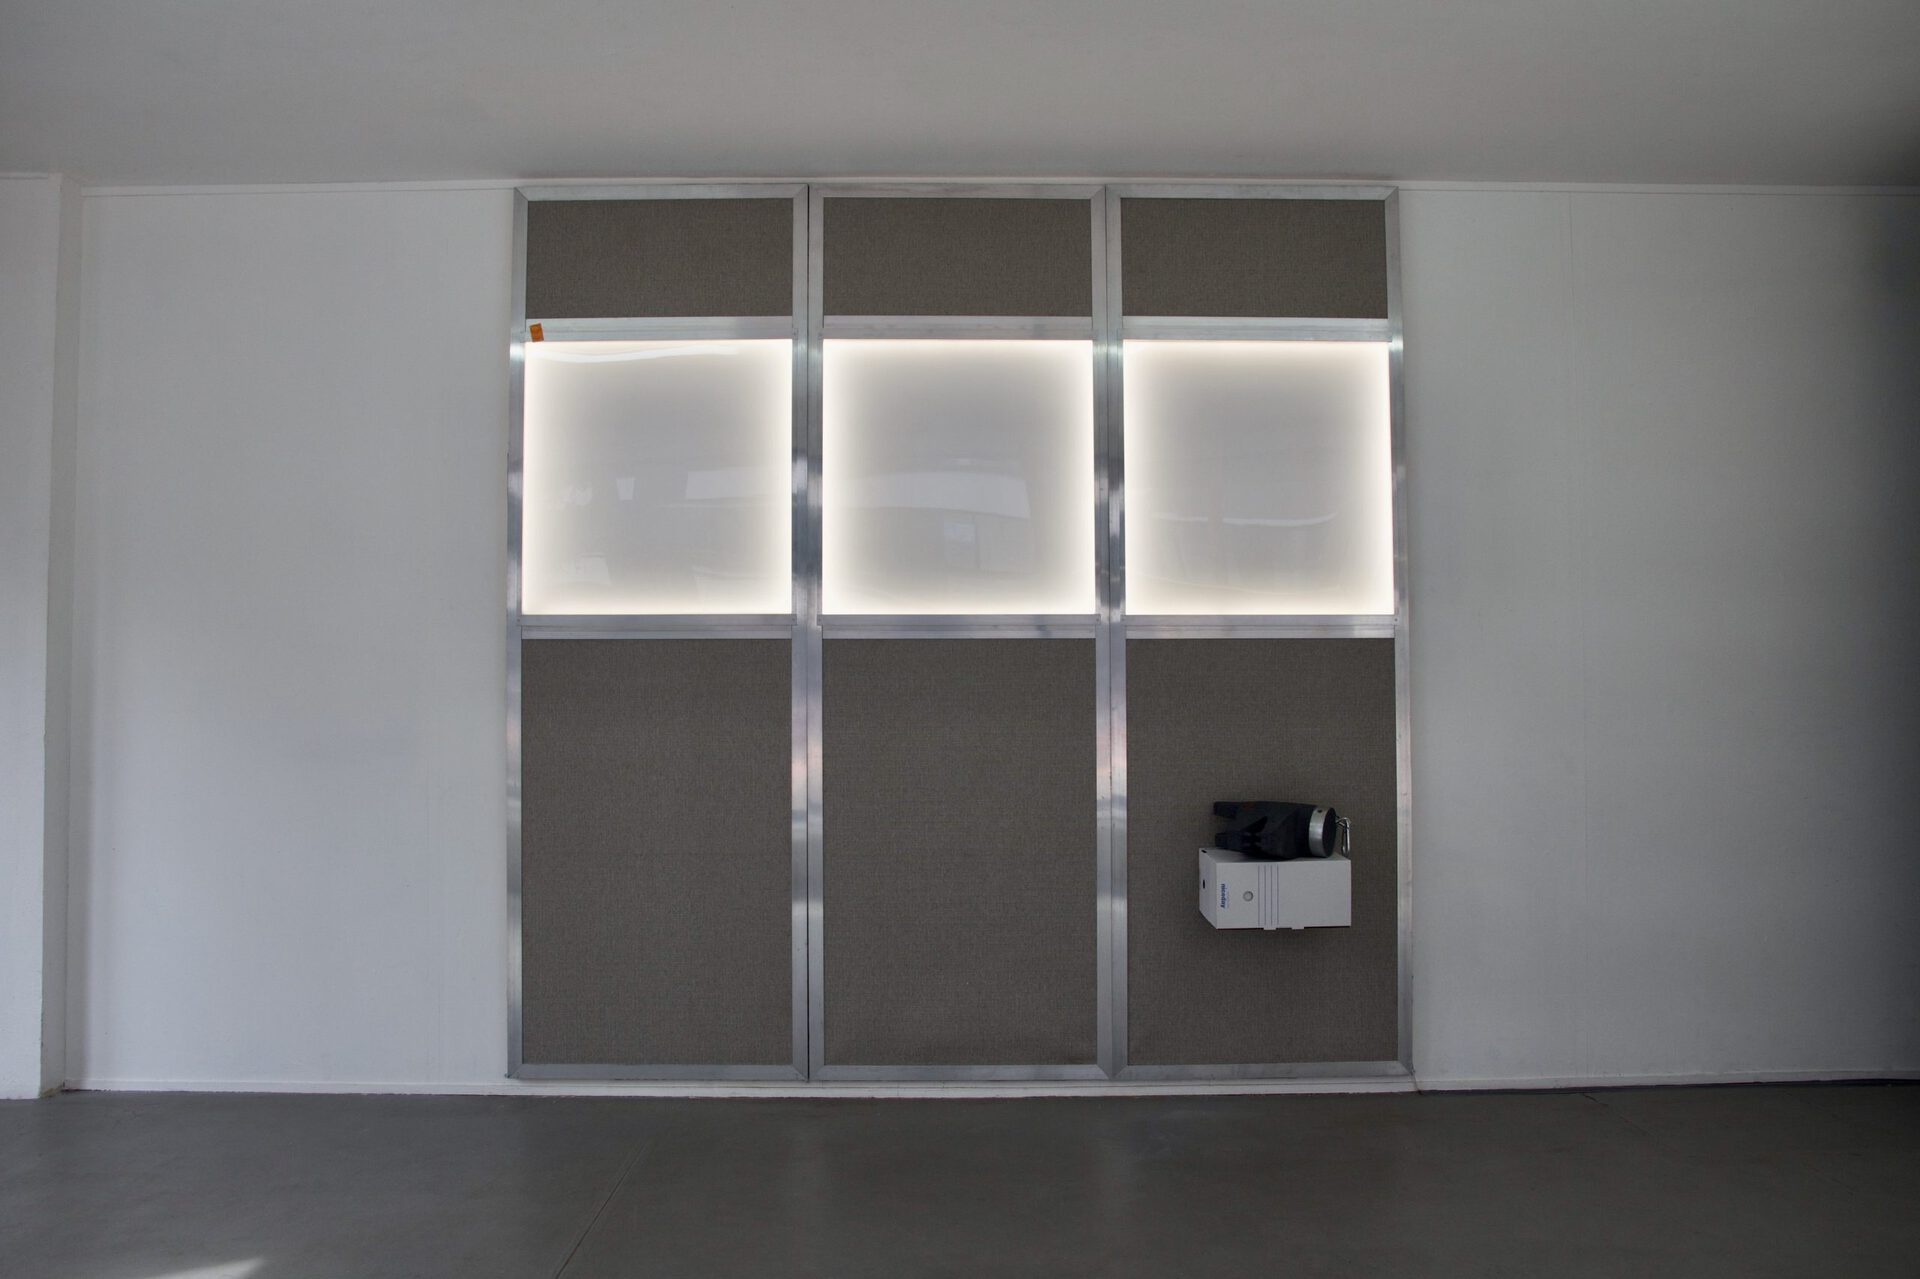 Romain Sarrot, exhibition view, 2021, Lokal-int